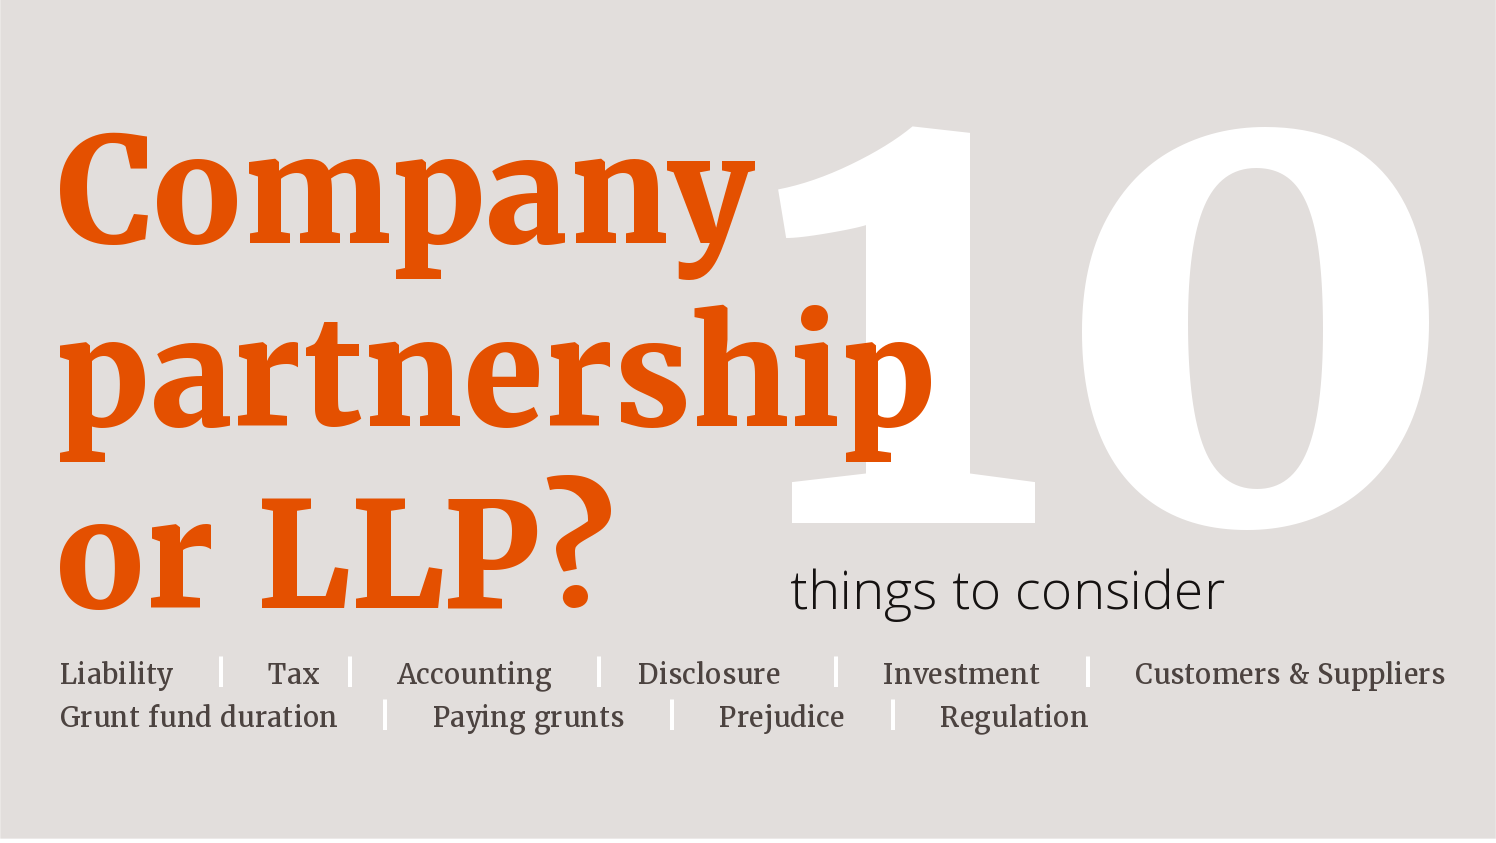 Company, partnership or LLP?